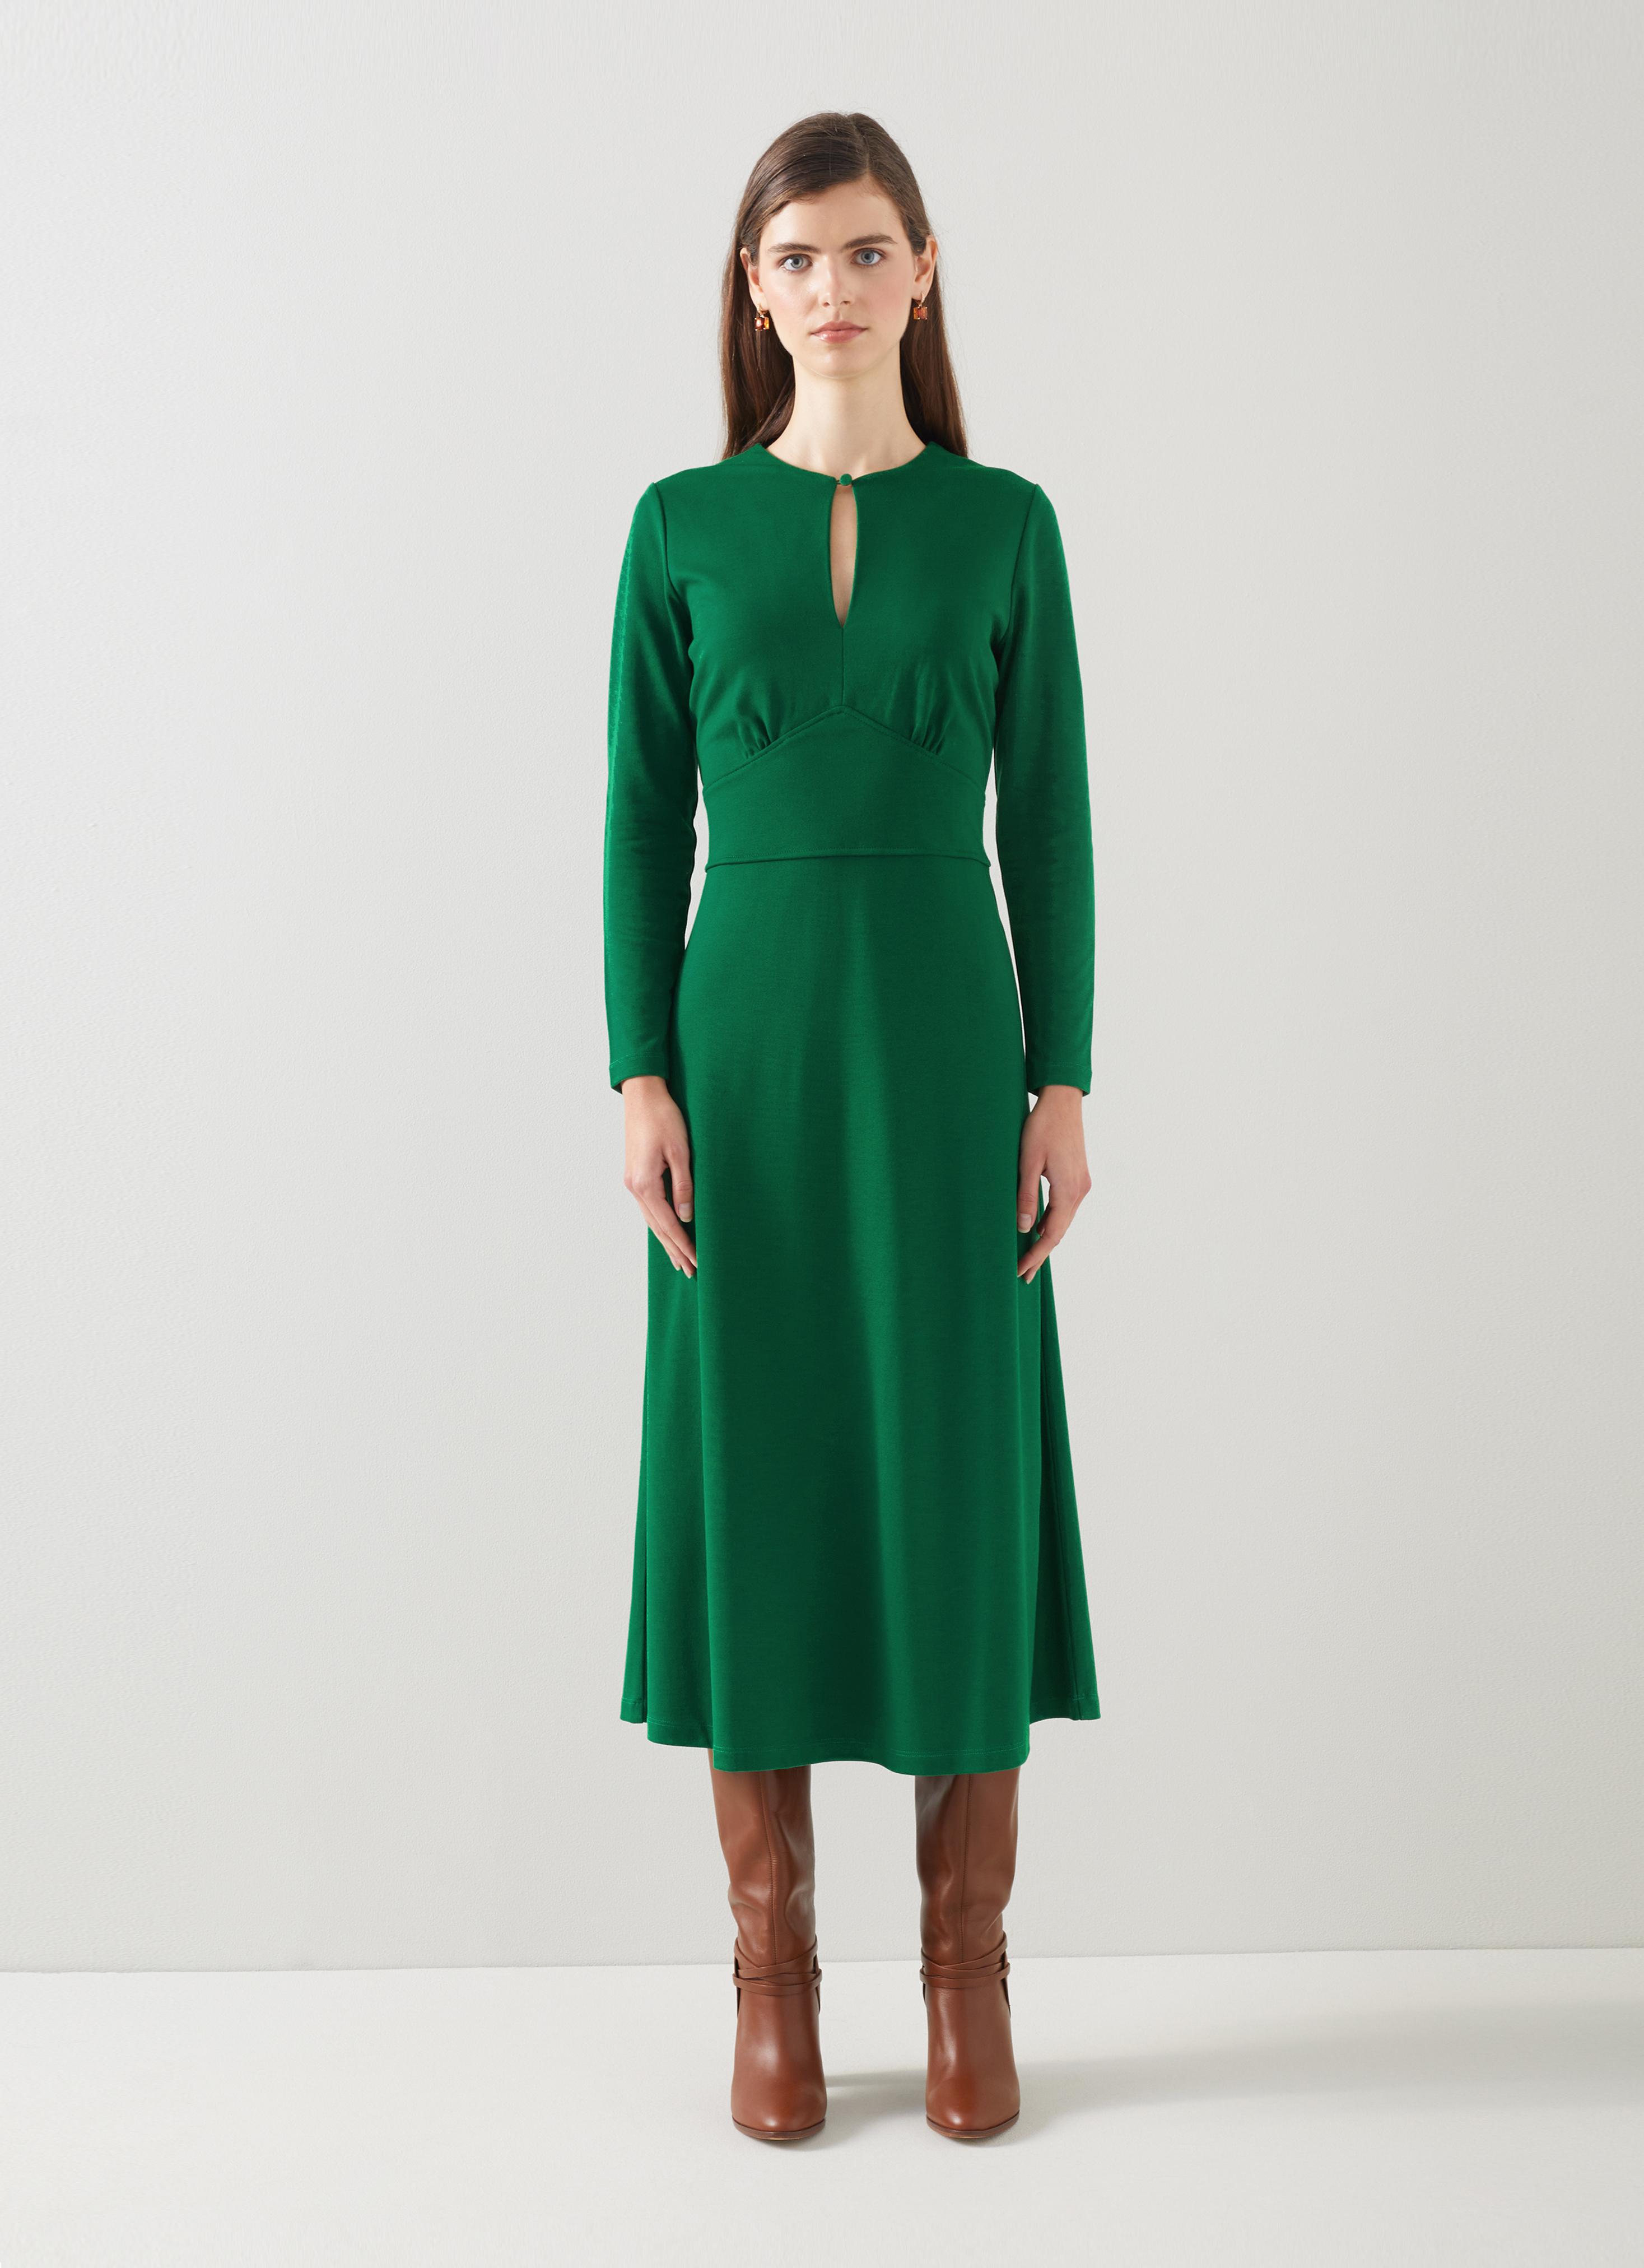 Sera Green Dress with LENZING ECOVERO viscose Dark Green, Dark Green